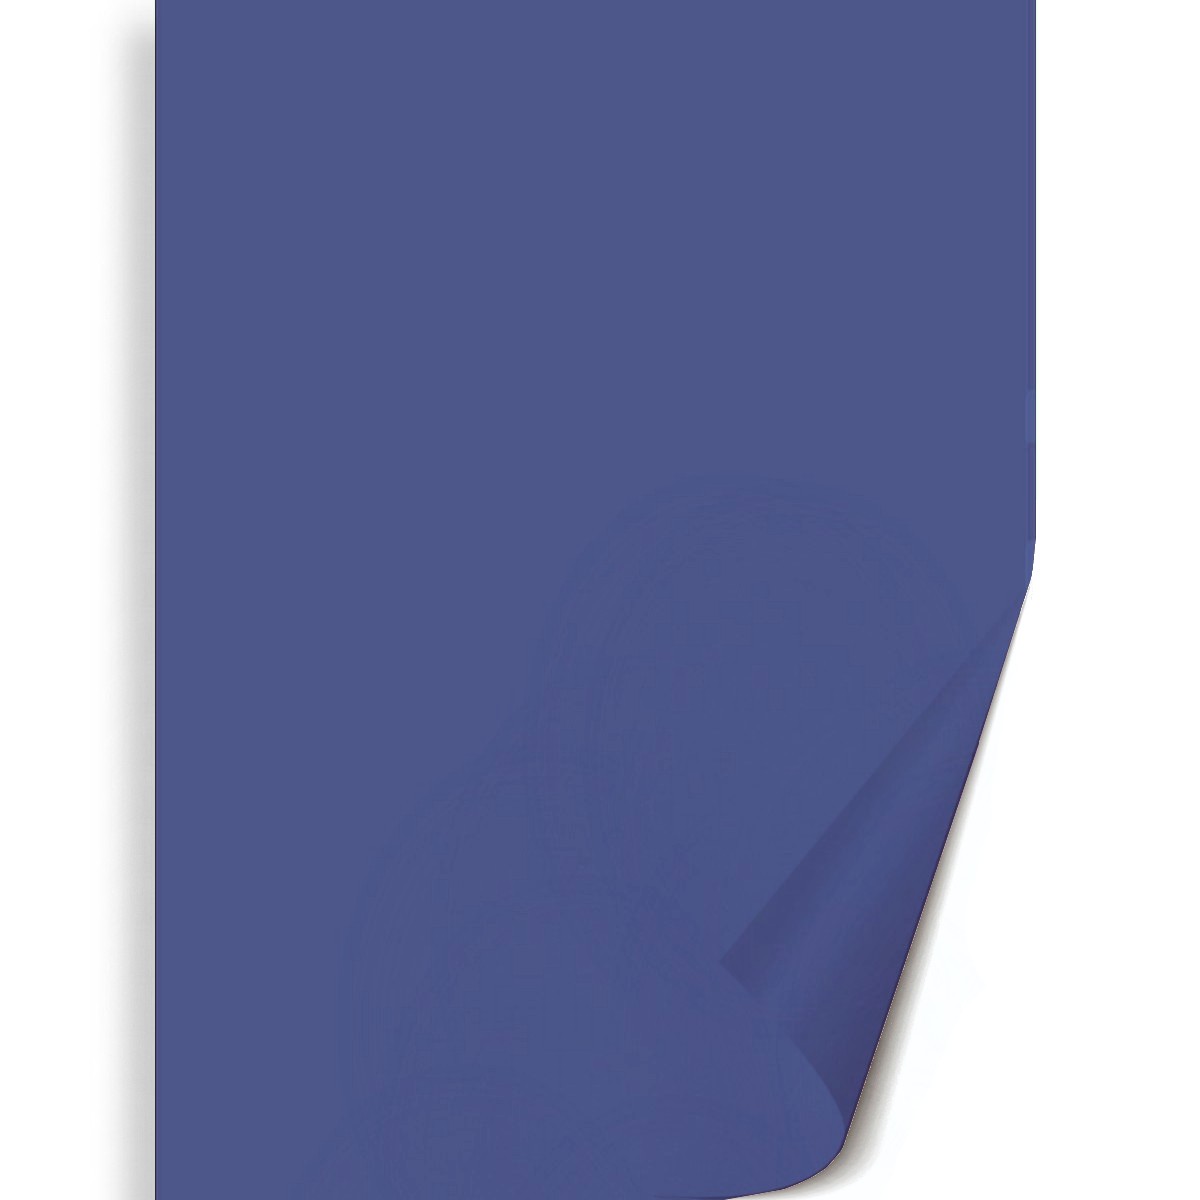 Hartie albastru ultramarin 50x70cm 130g Meyco 27211